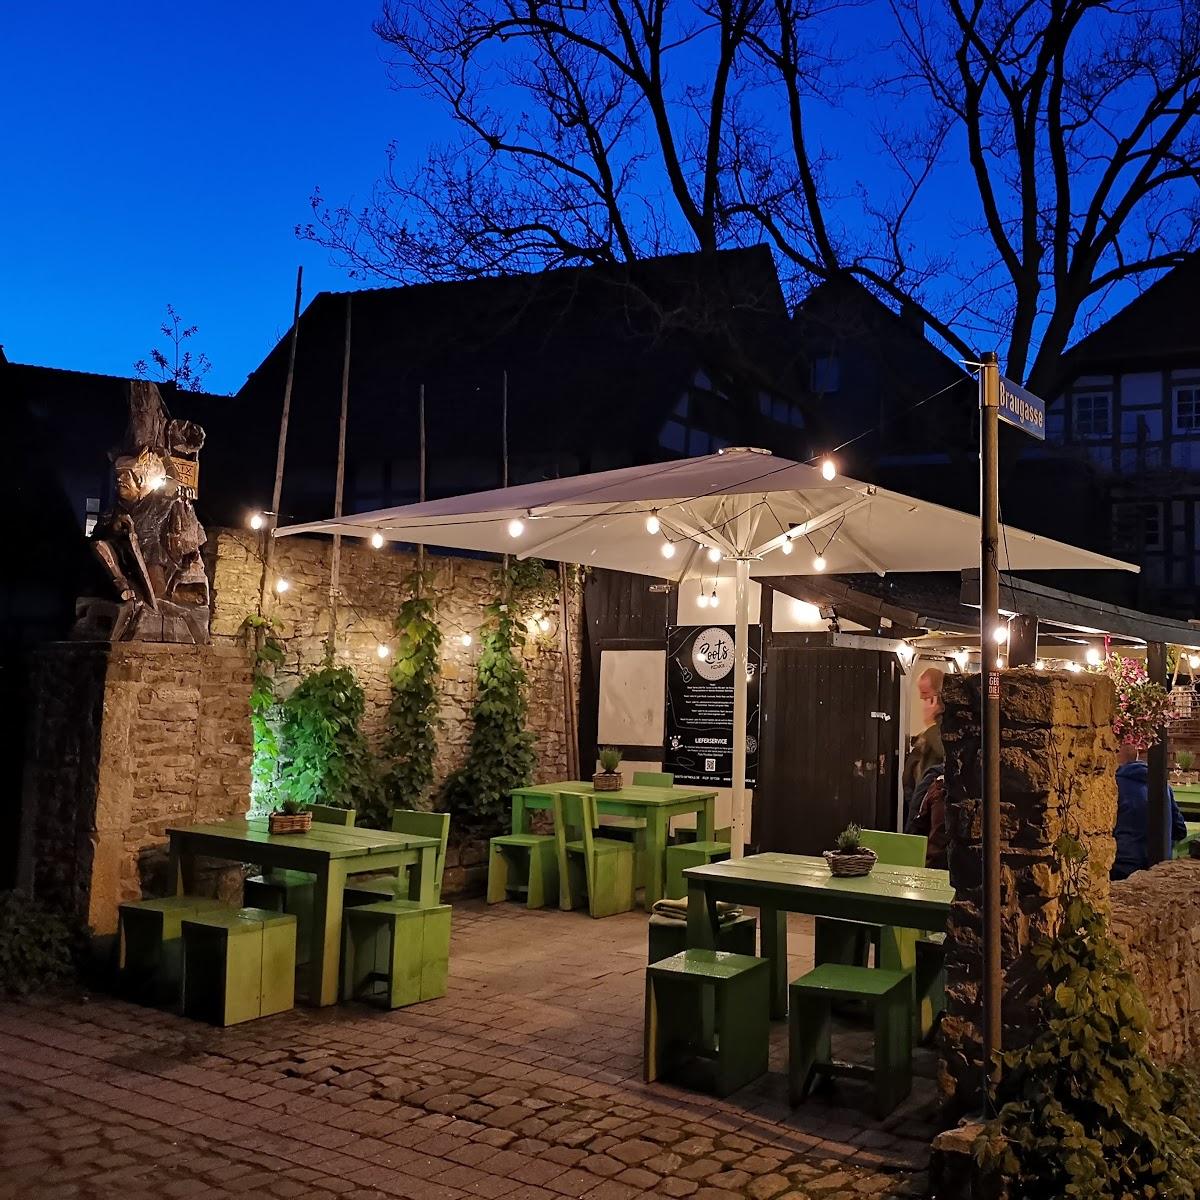 Restaurant "Roots meets Pizzabox" in Detmold